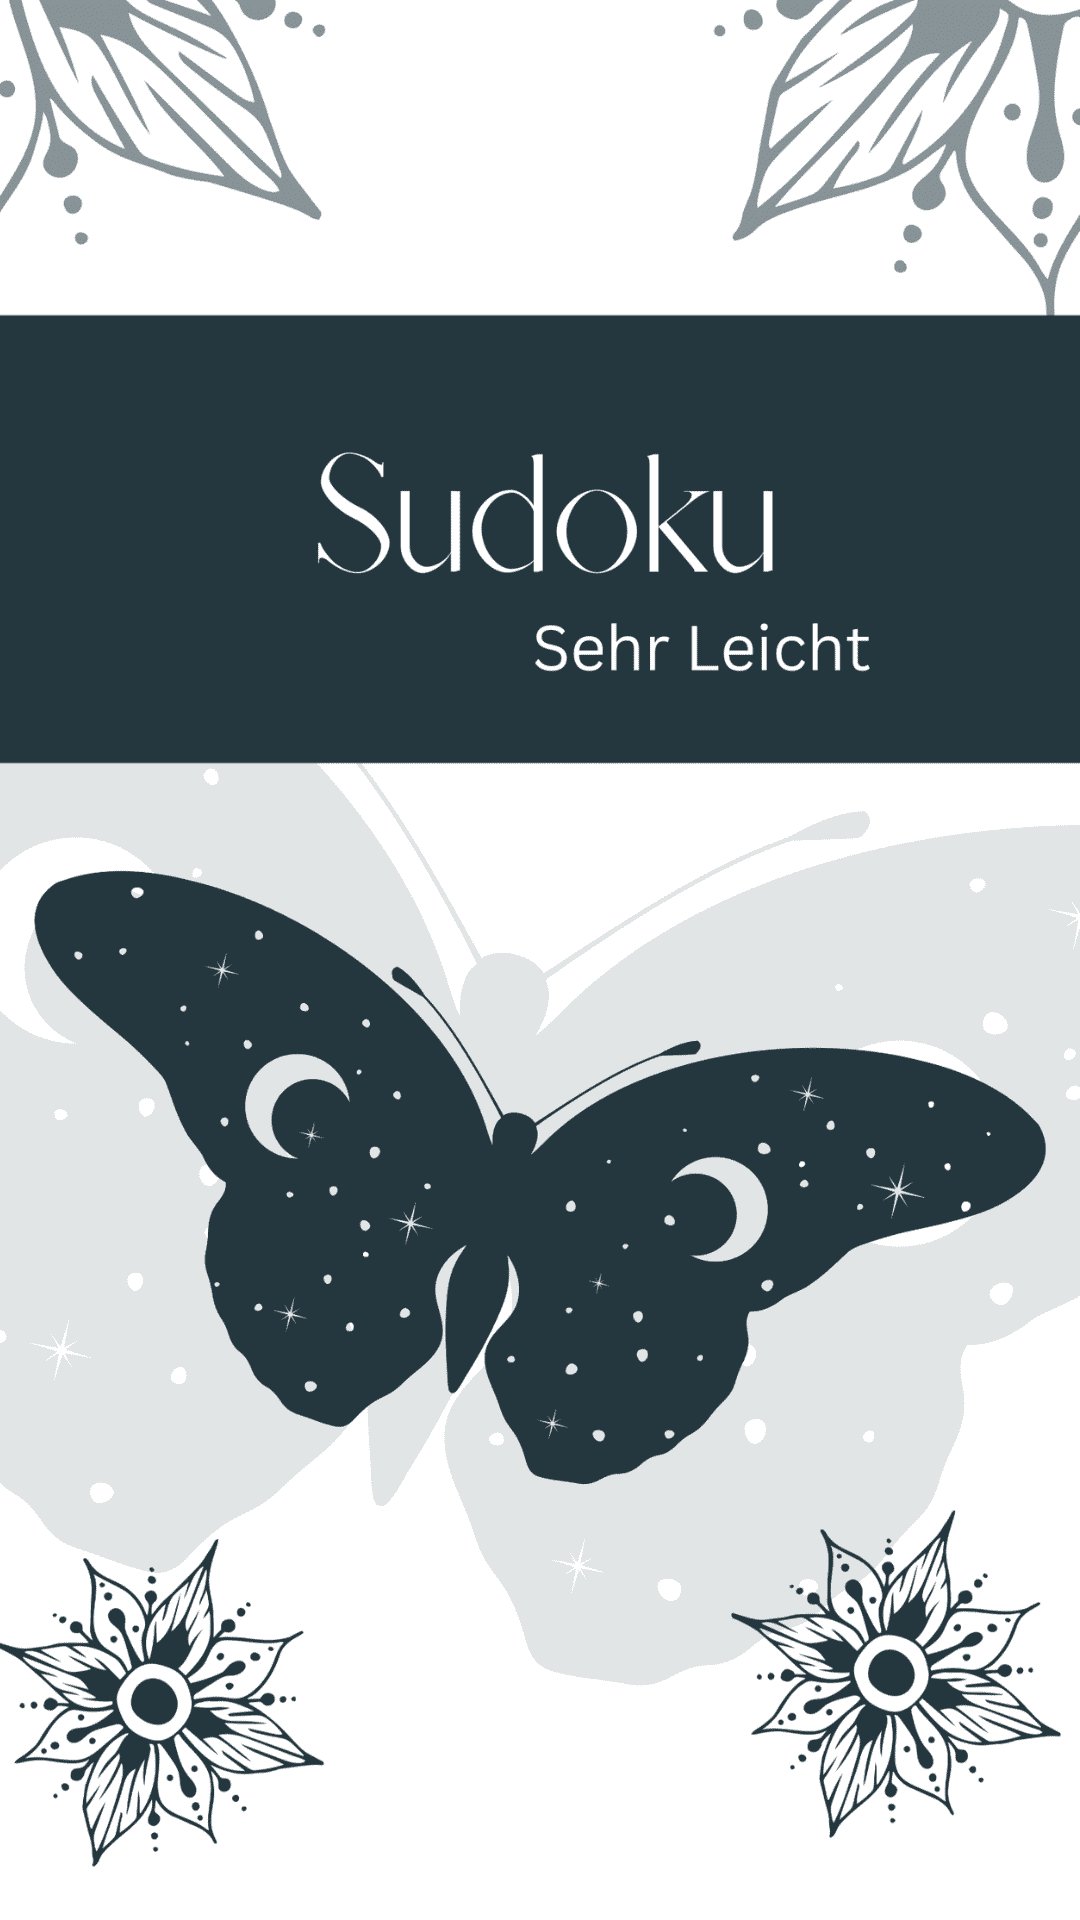 Sudoku Leicht (1)